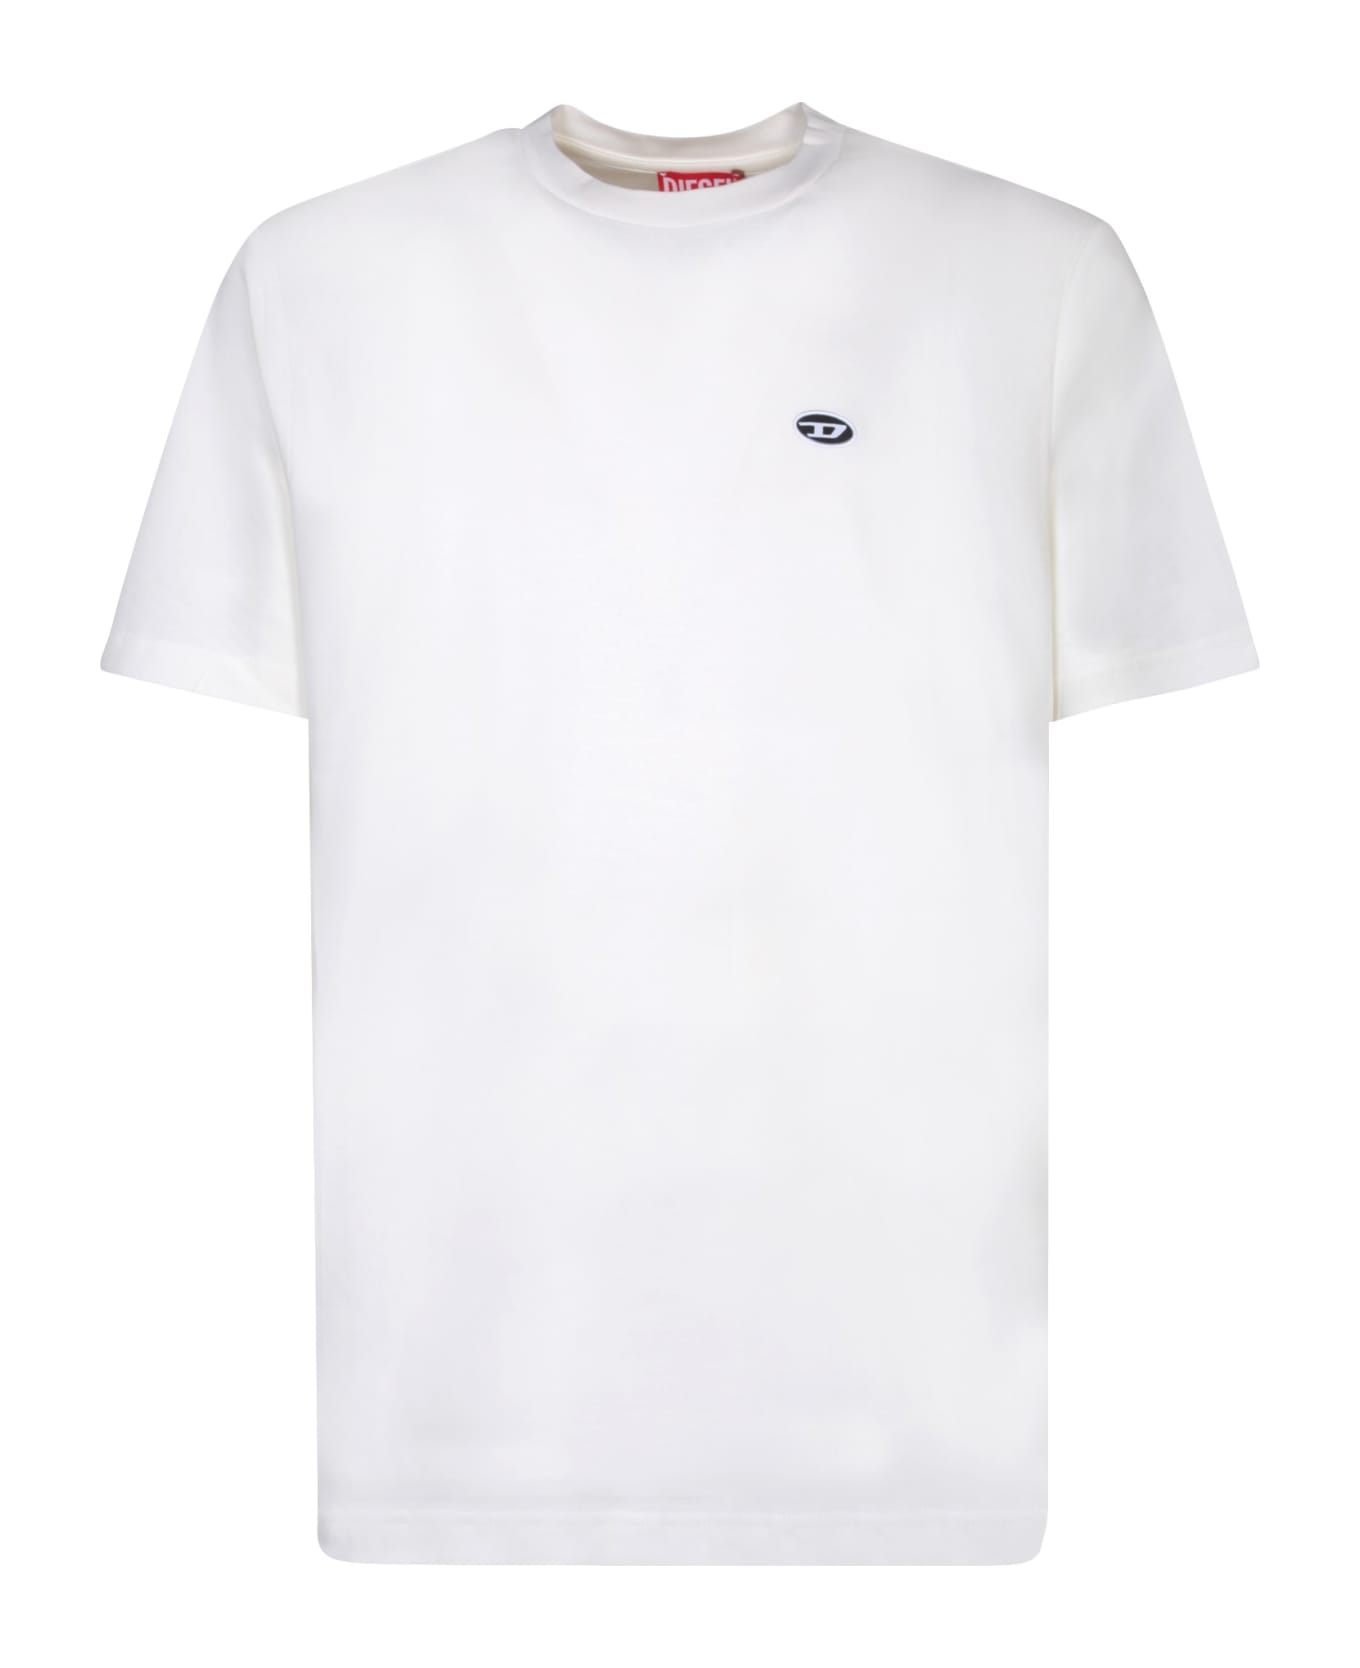 Diesel T-just-dobal-pj White T-shirt - White